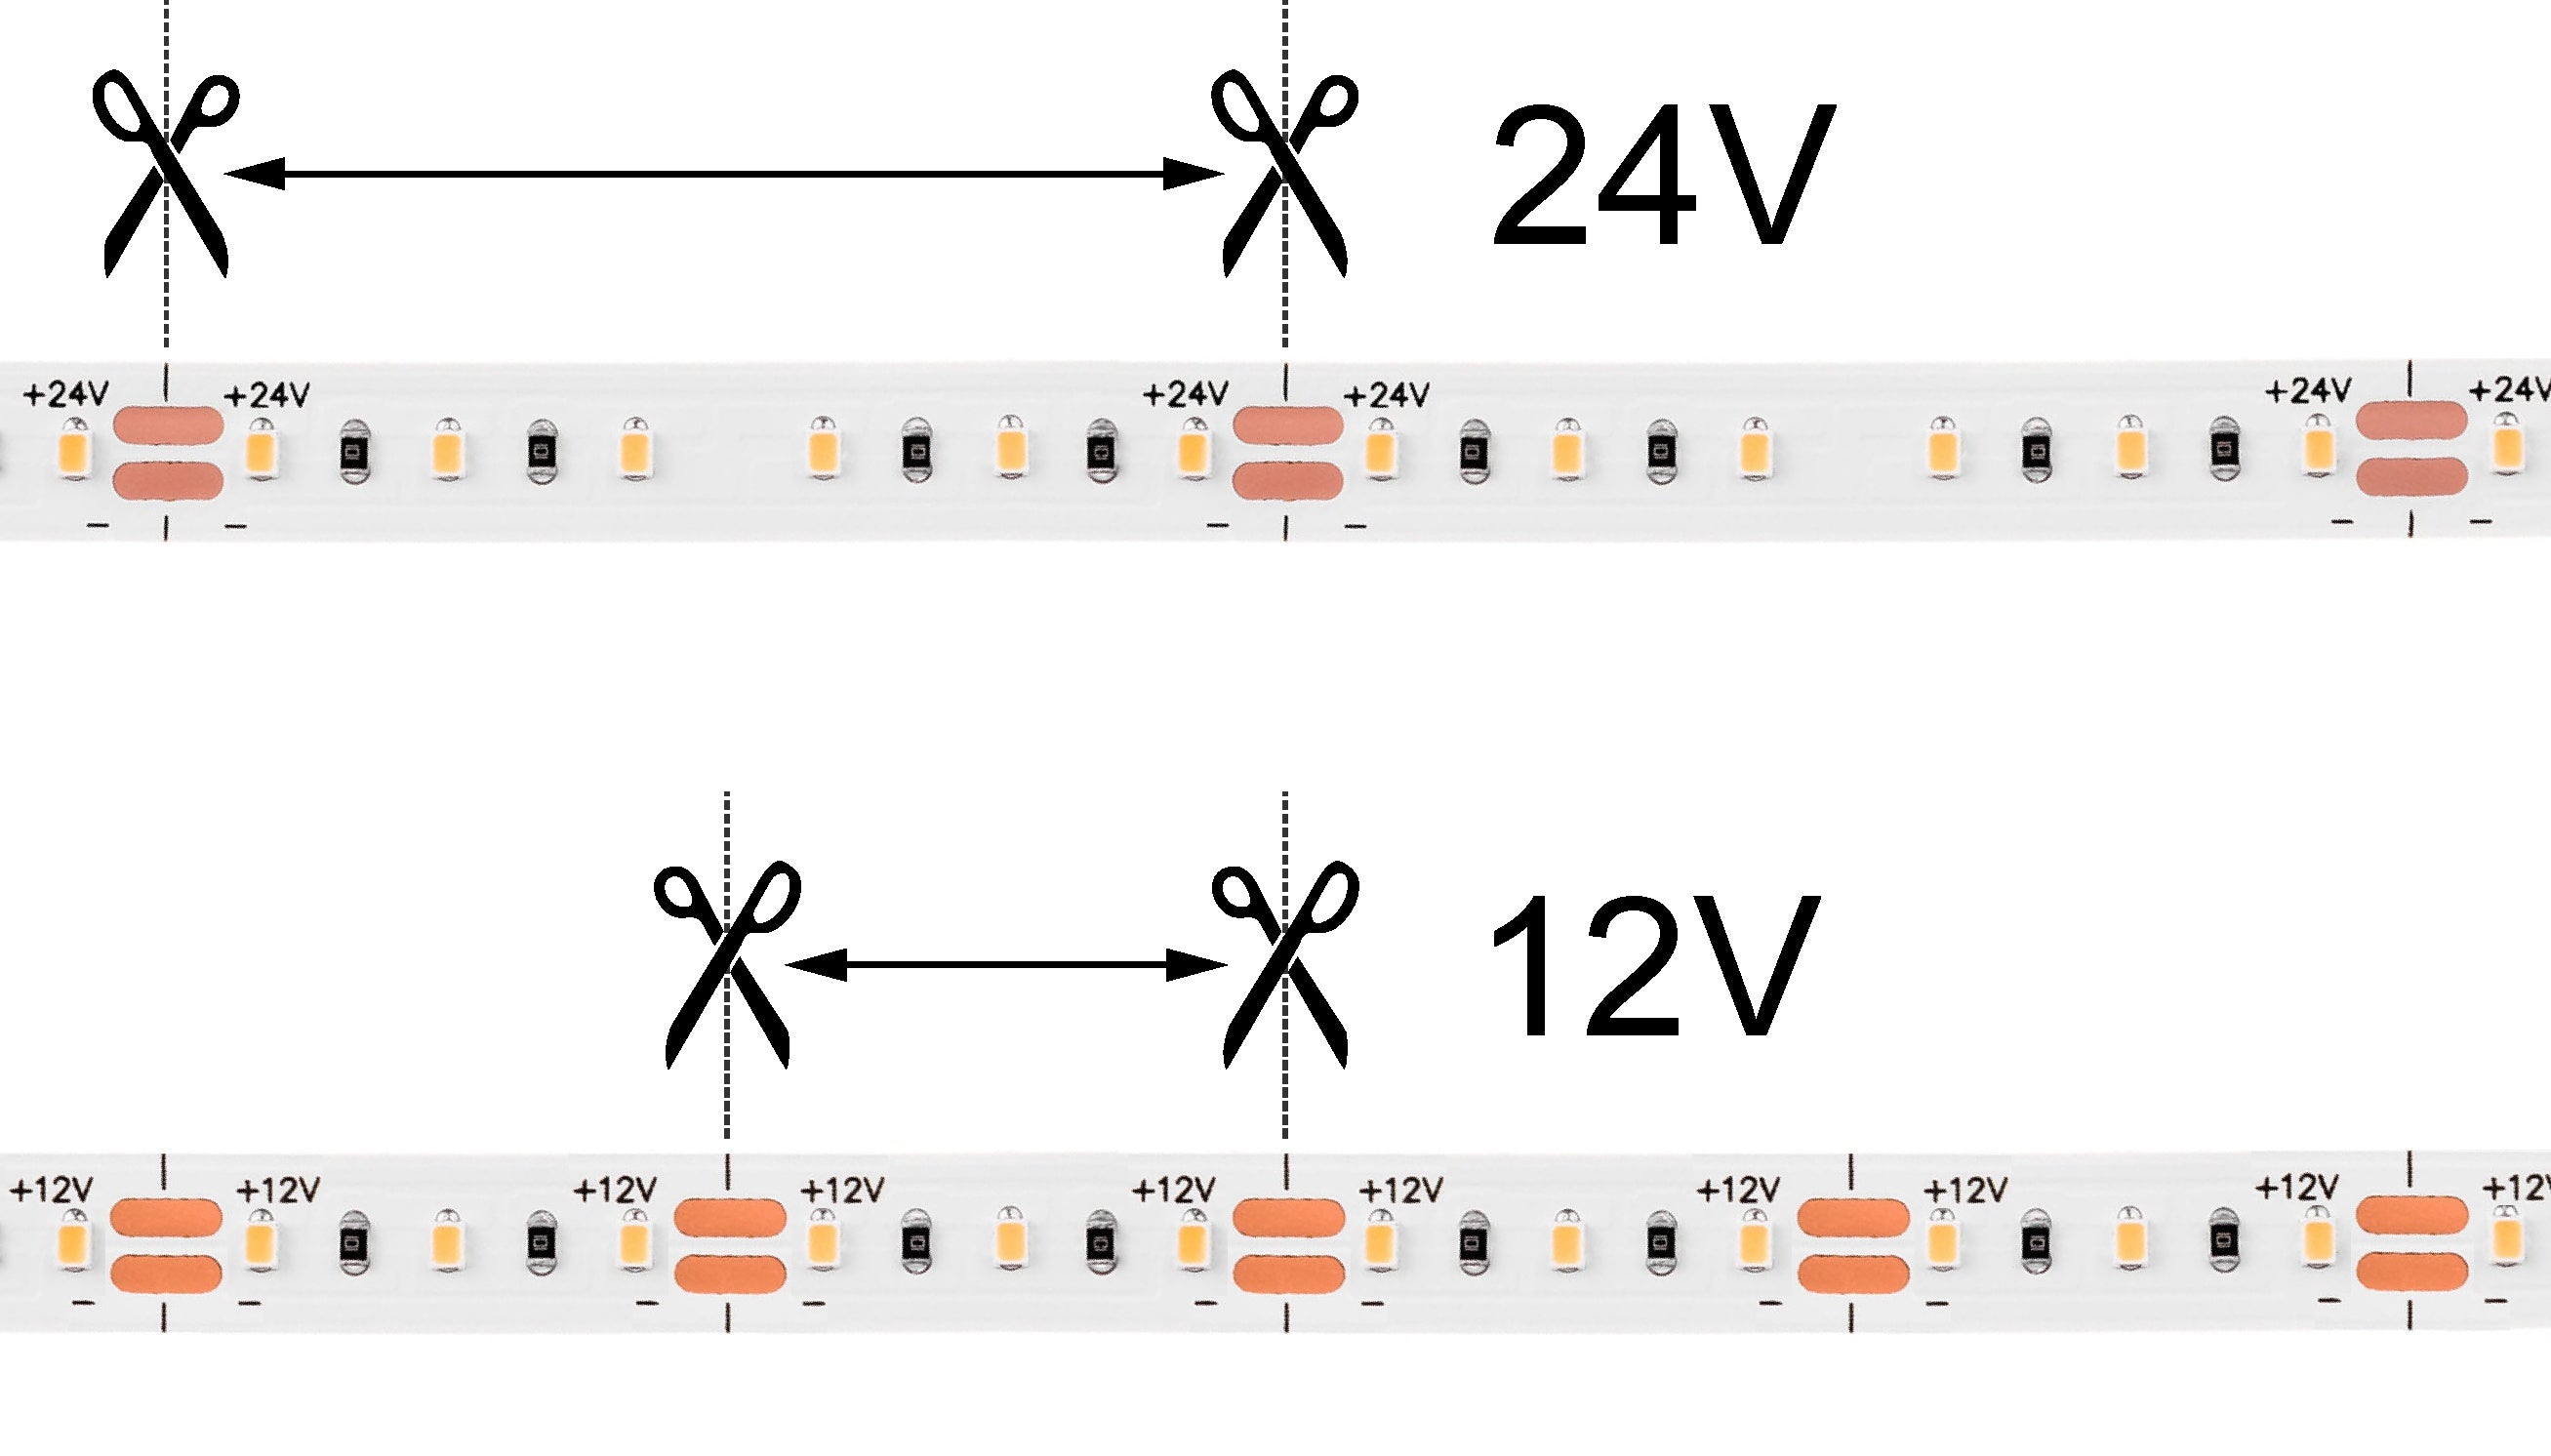 12V LED strip lights vs 24V LED strip lights